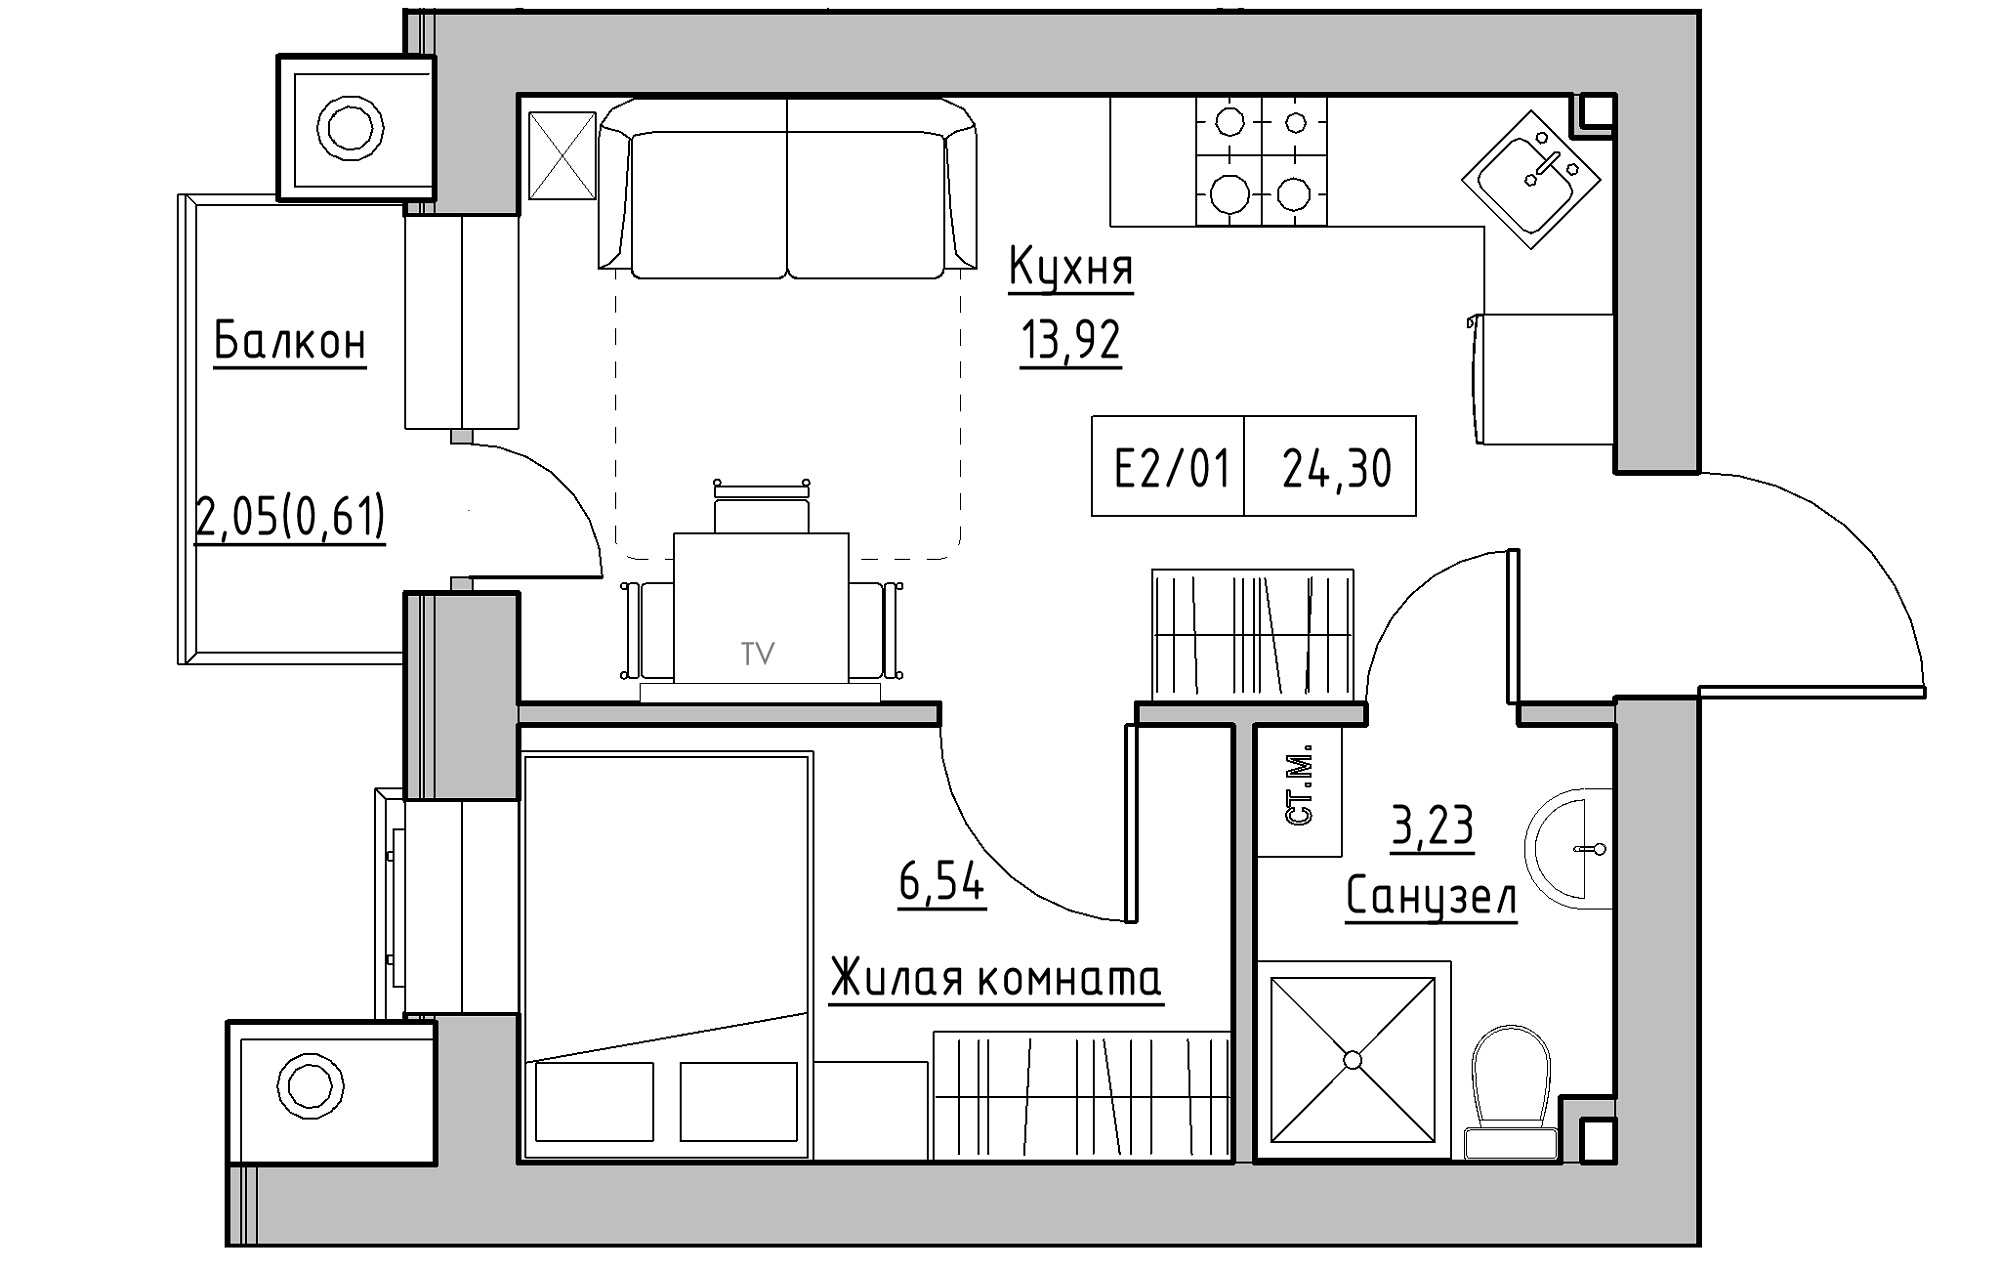 Planning 1-rm flats area 24.3m2, KS-013-03/0005.